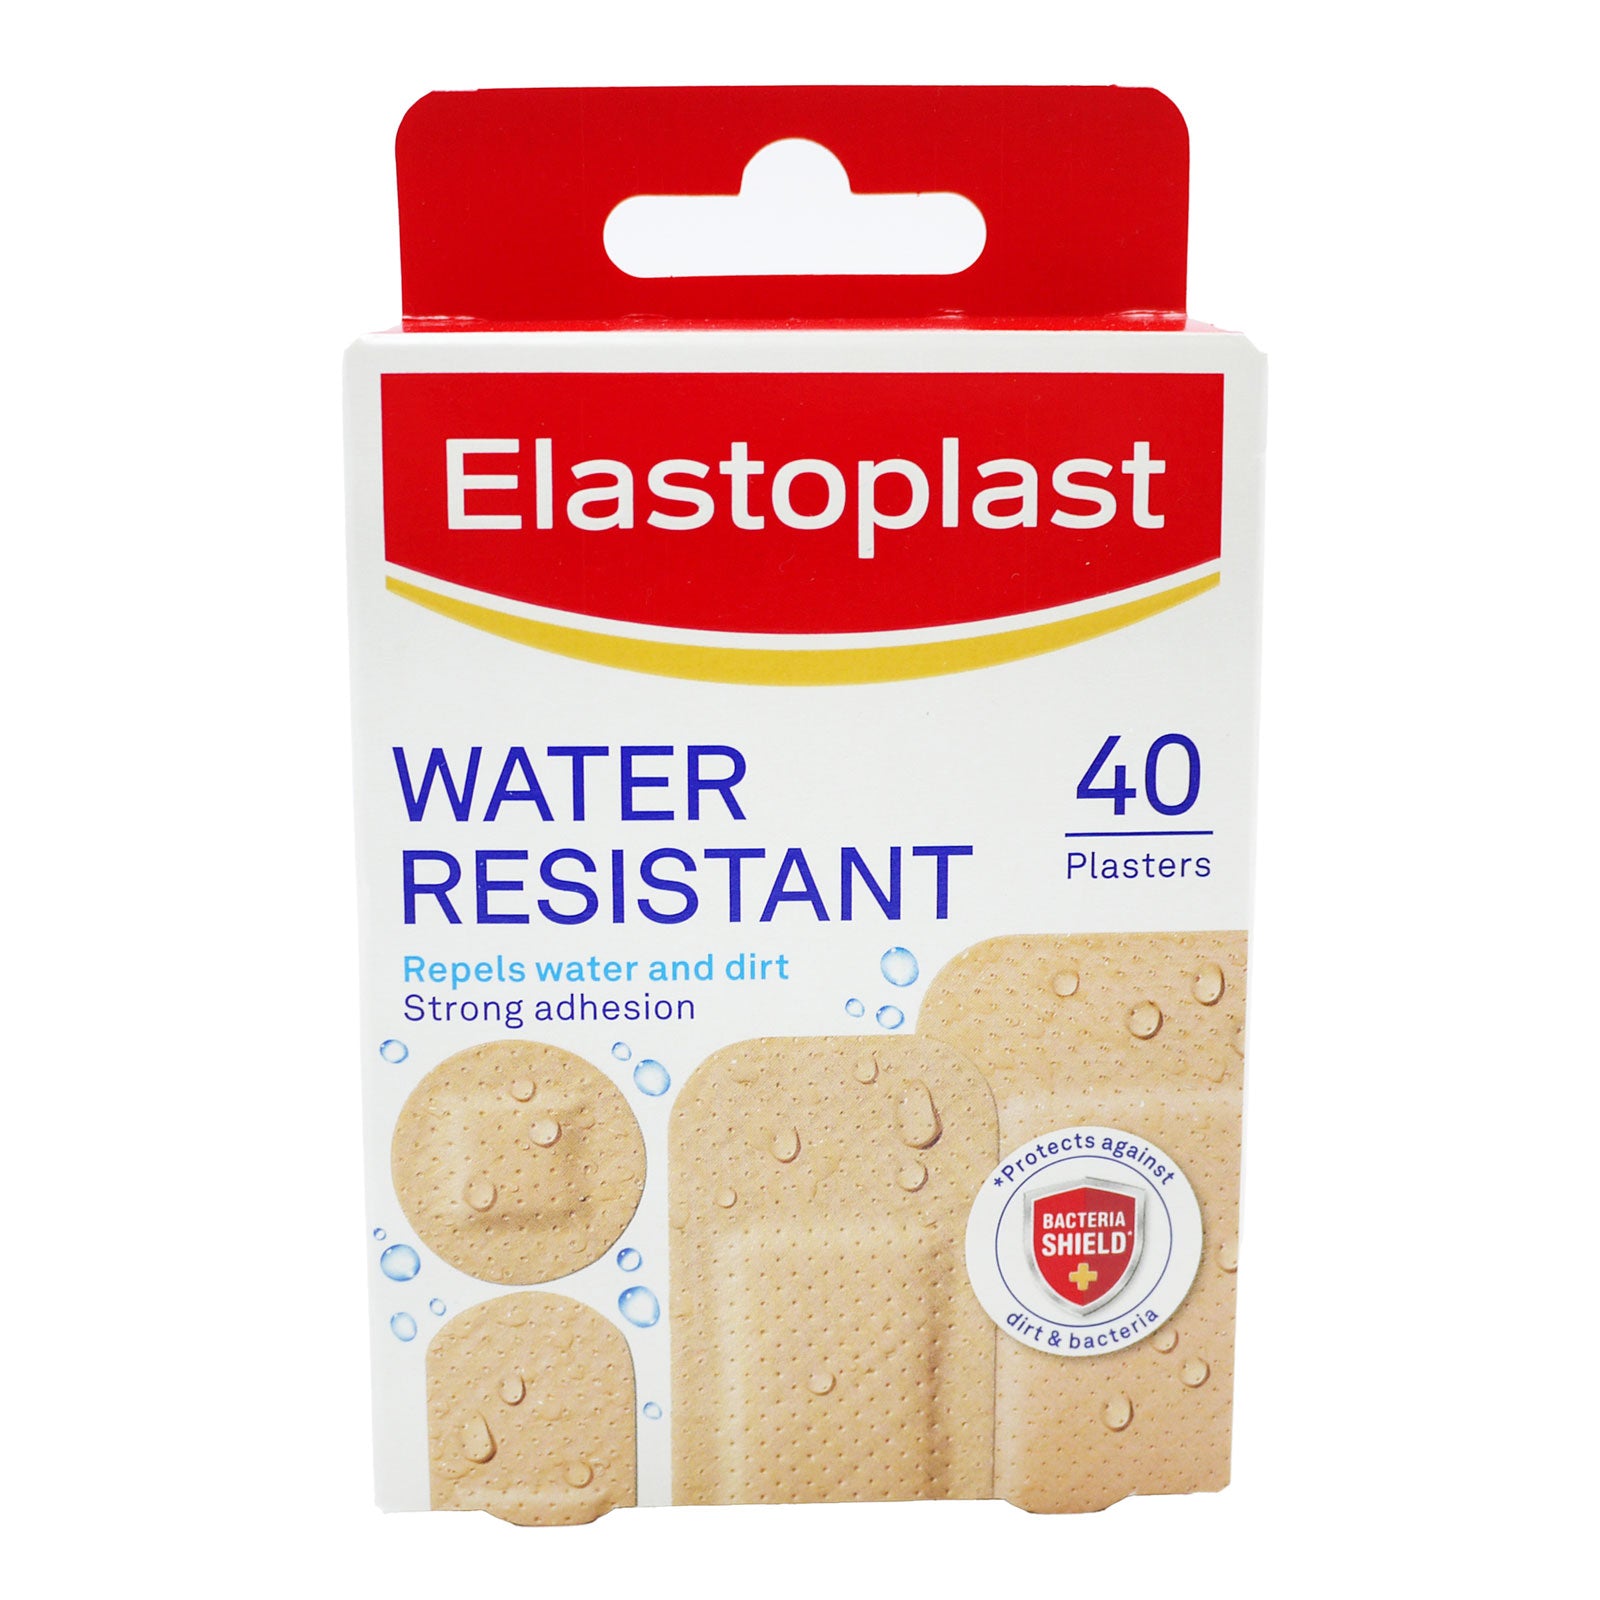 Elastoplast Water Resistant  40 Plasters.